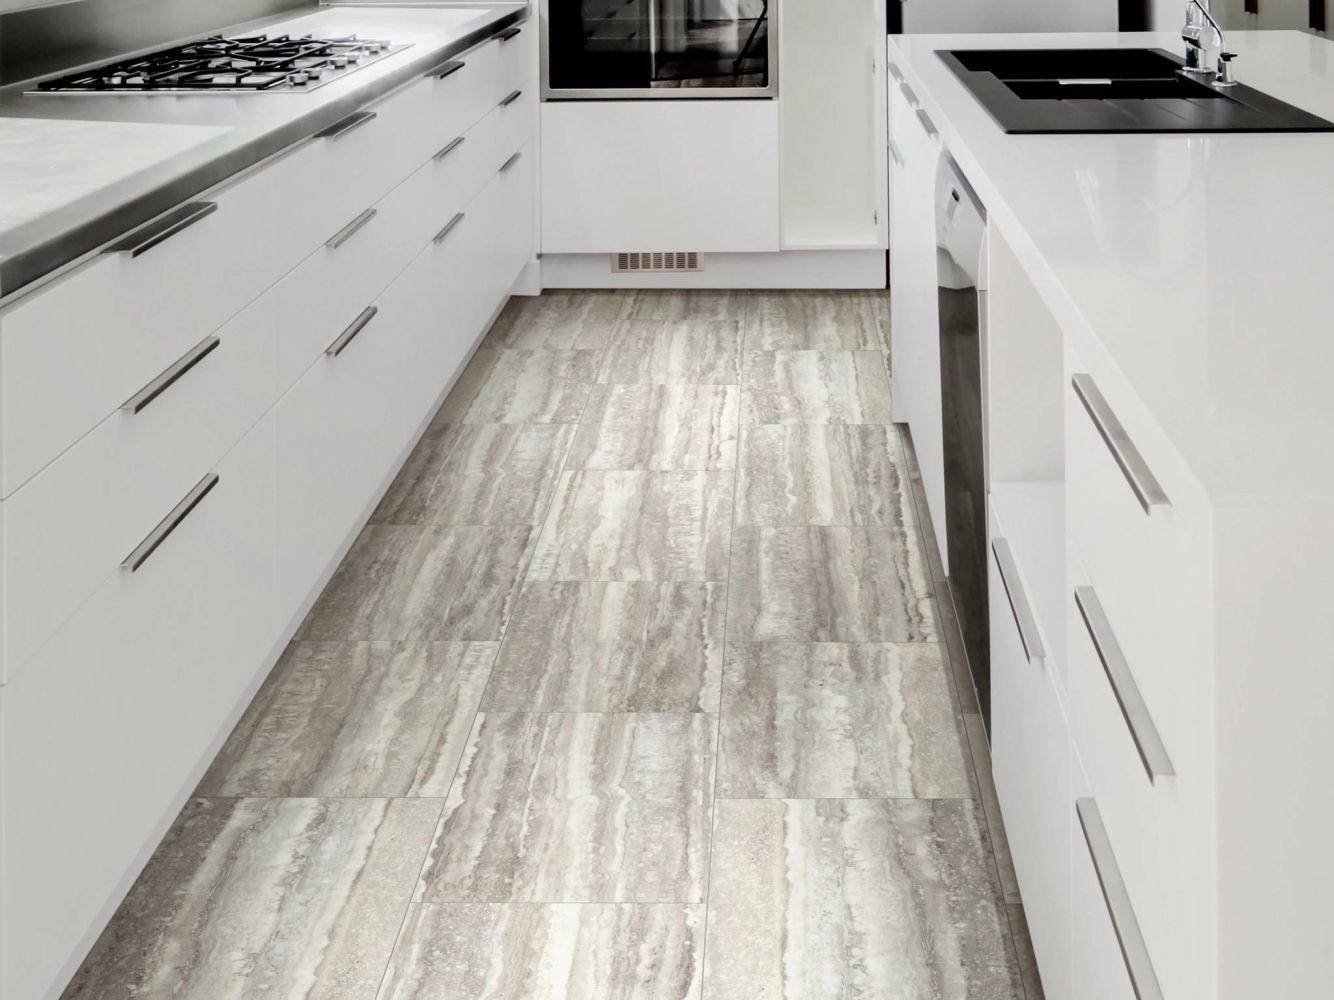 Shaw Floors Cp Colortile Rigid Core Plank And Tile Aspire Tile Bosco 05132_CV197